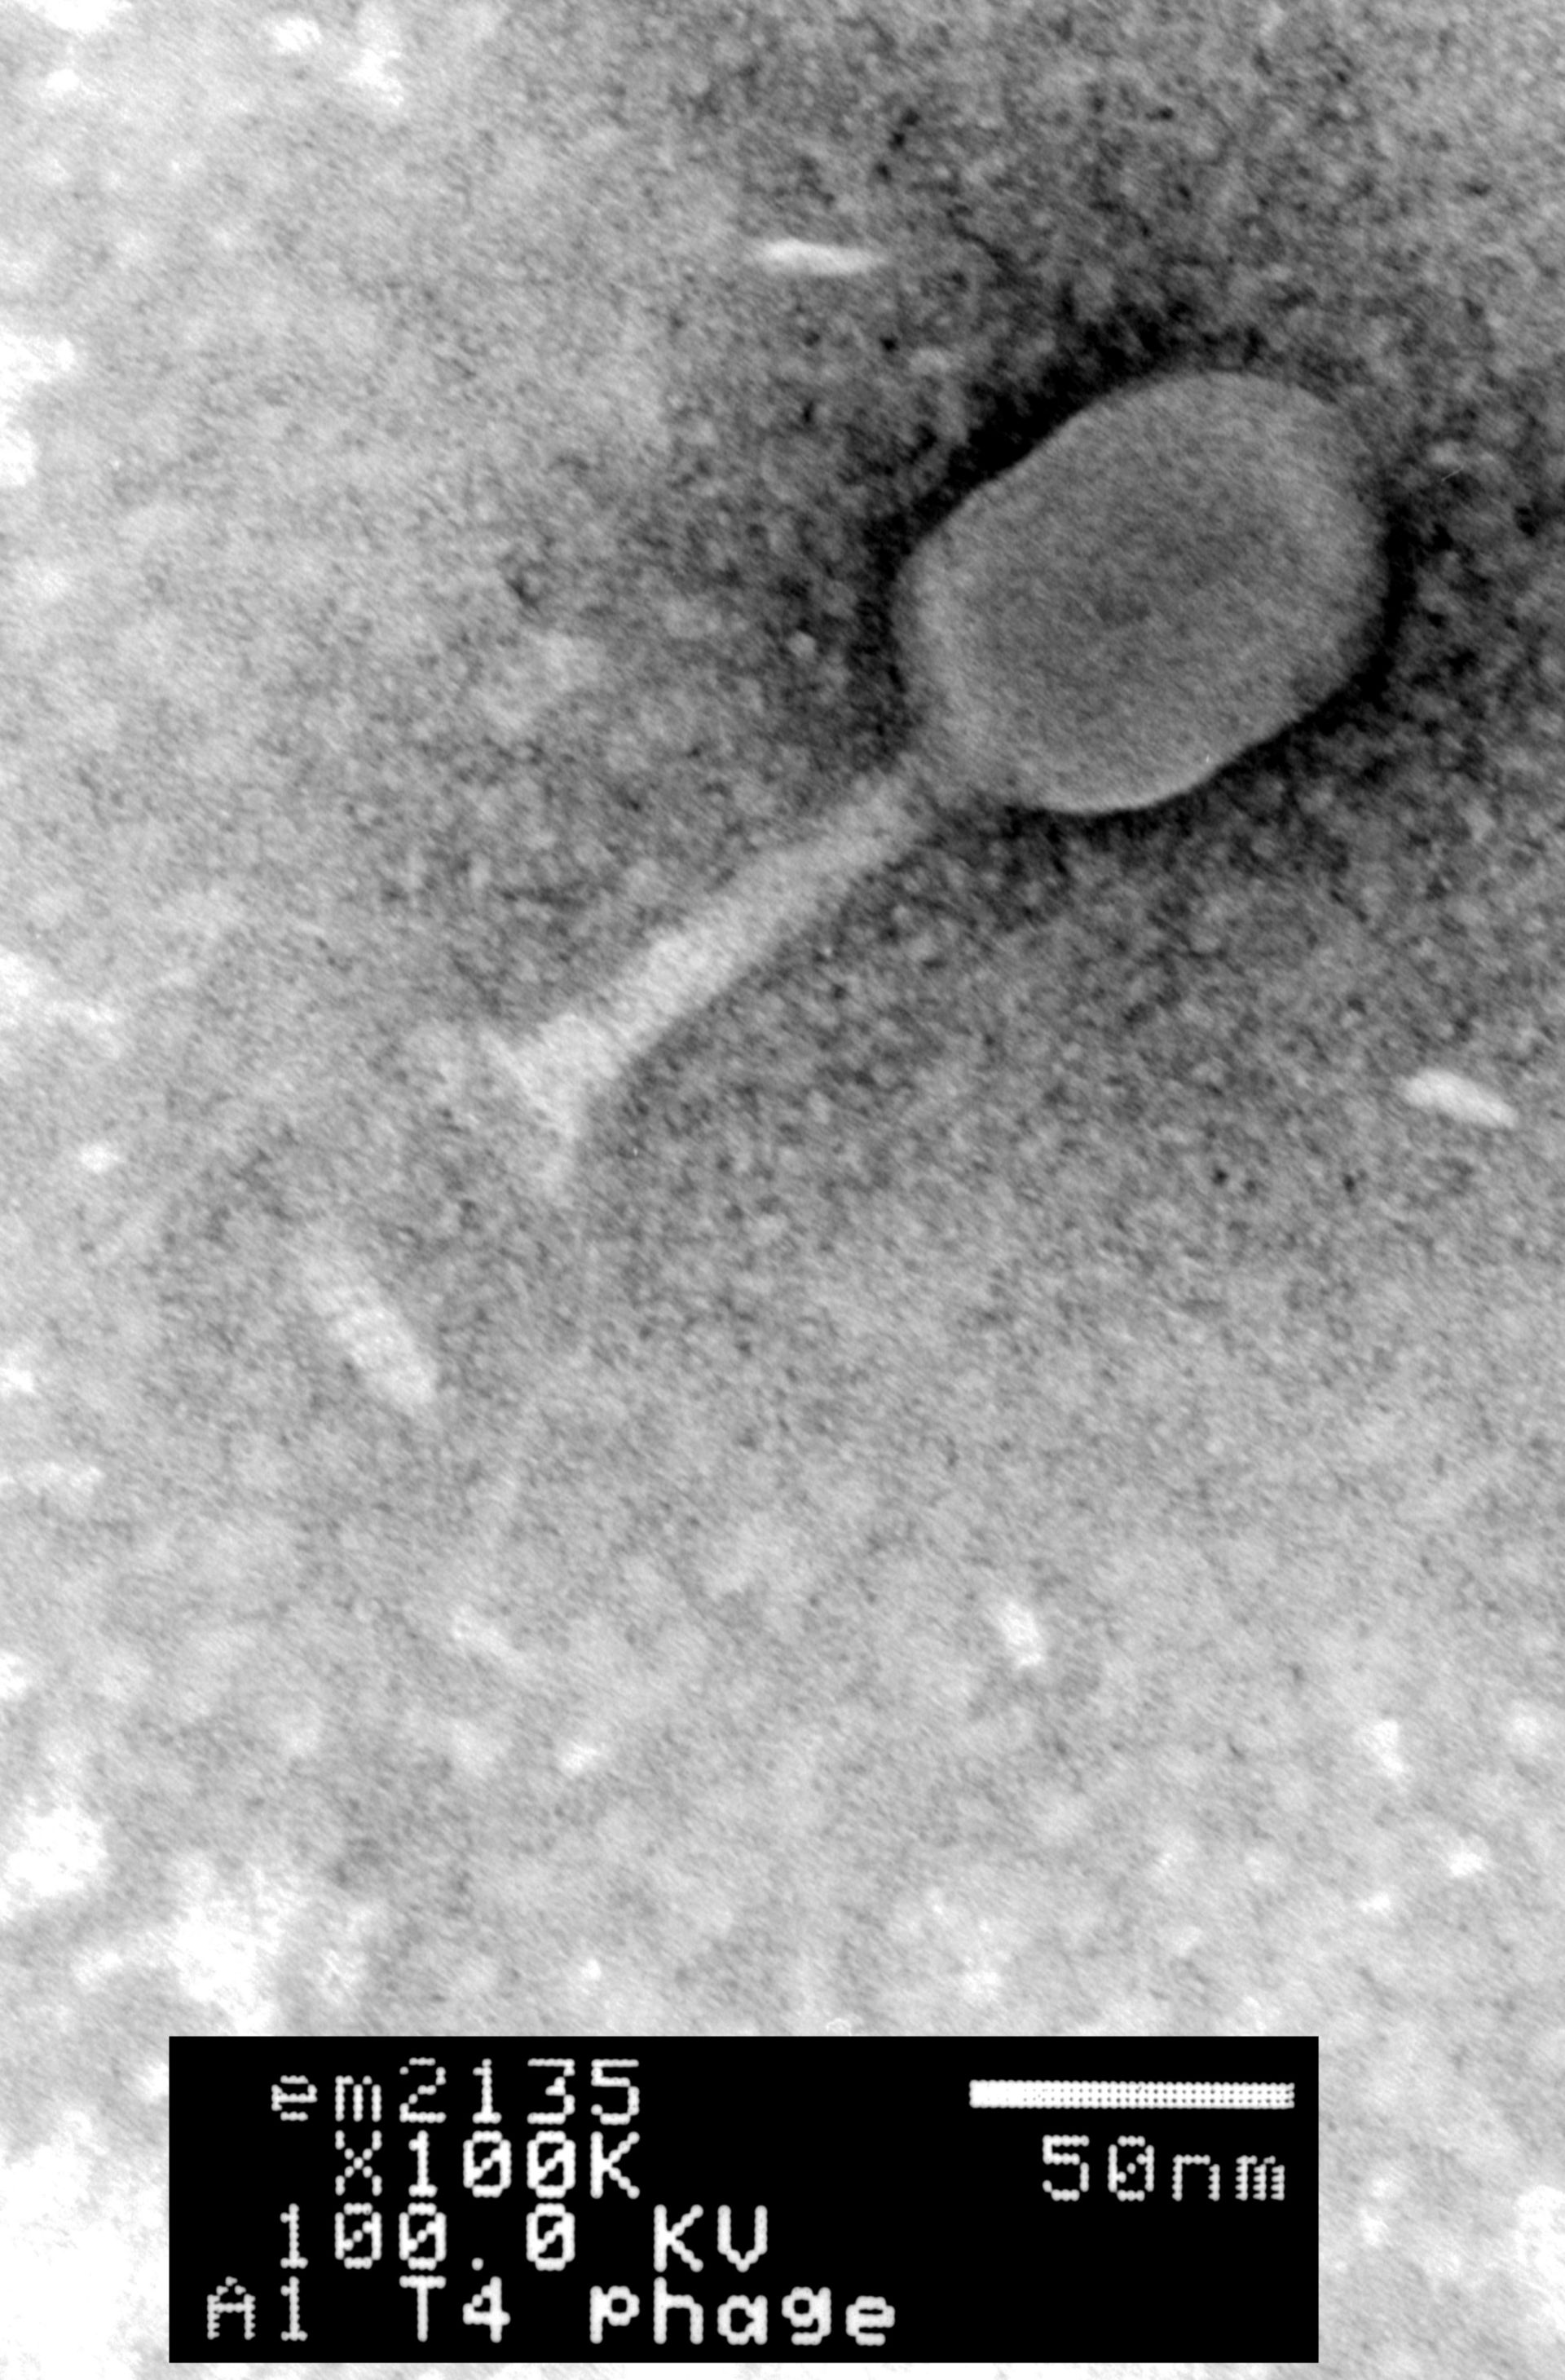 Enterobacteria phage T4 (Phage tail fibers) - CIL:41130